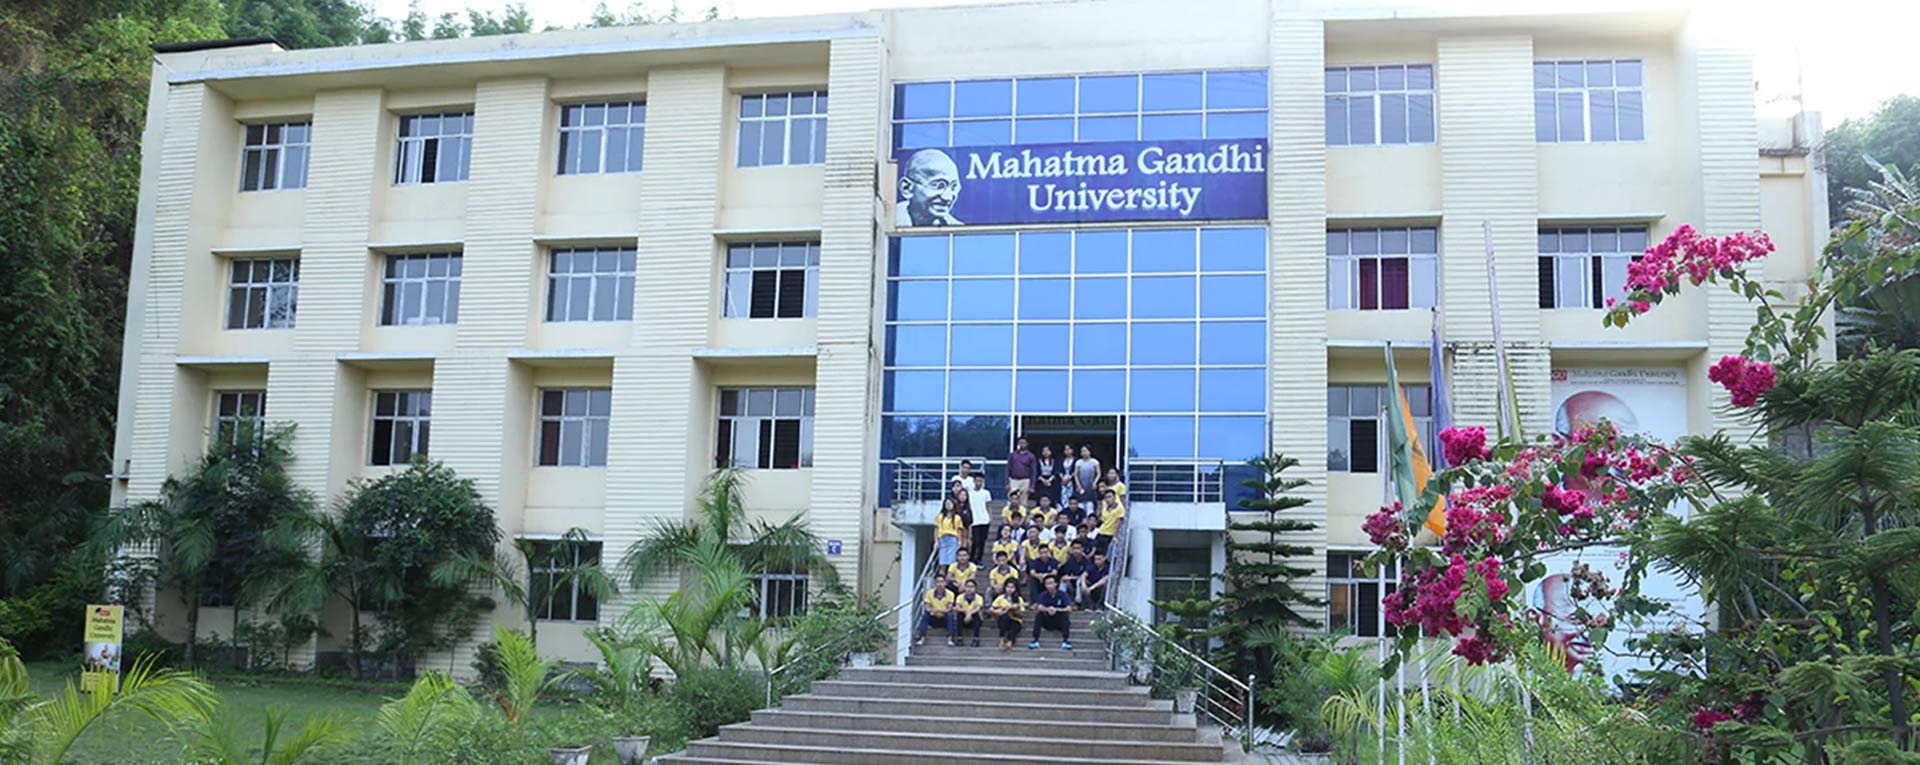 Mahatma Gandhi University, Meghalaya